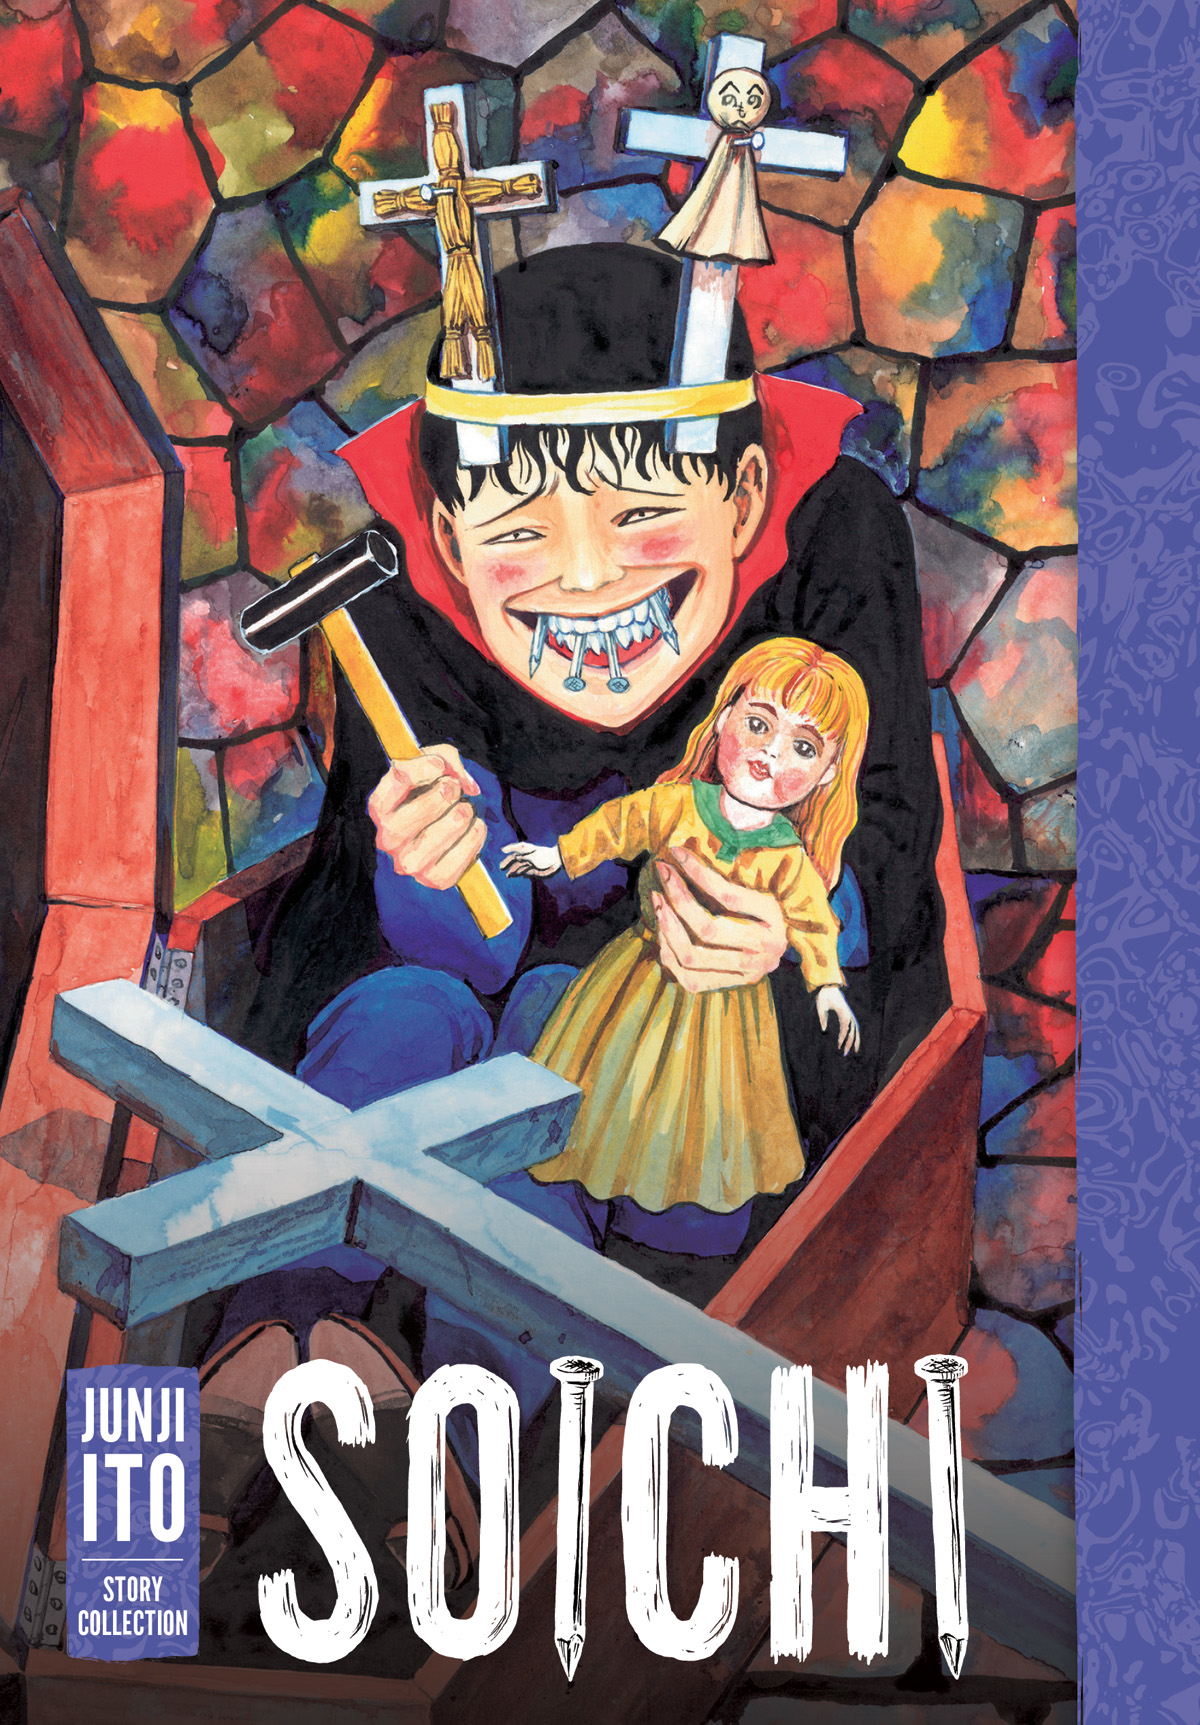 Junji Ito Story Collection Hardcover Volume 10 Soichi